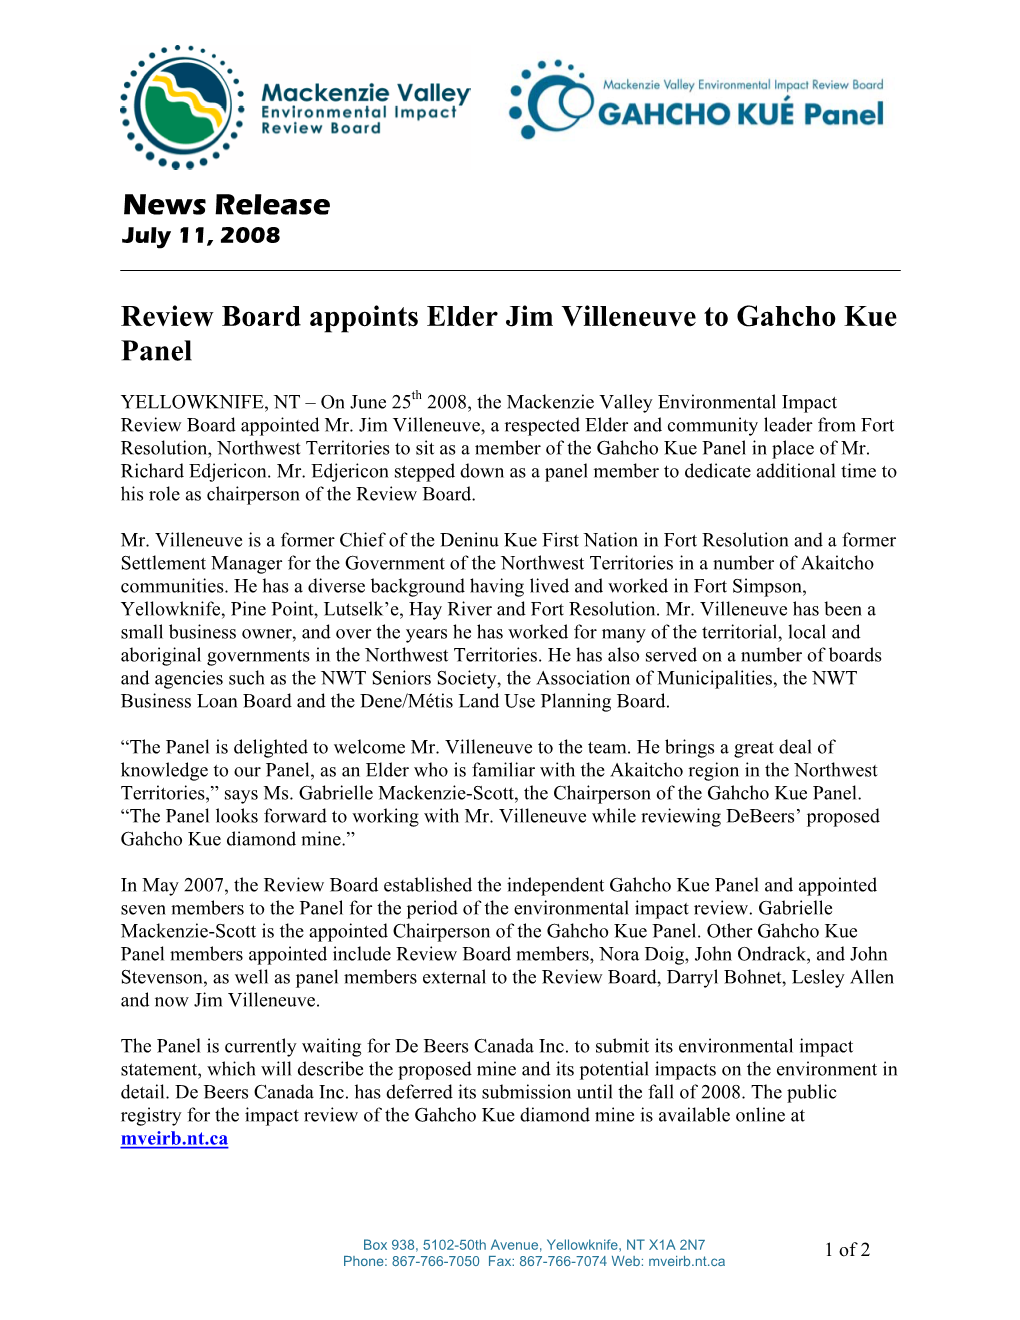 News Release Review Board Appoints Elder Jim Villeneuve To